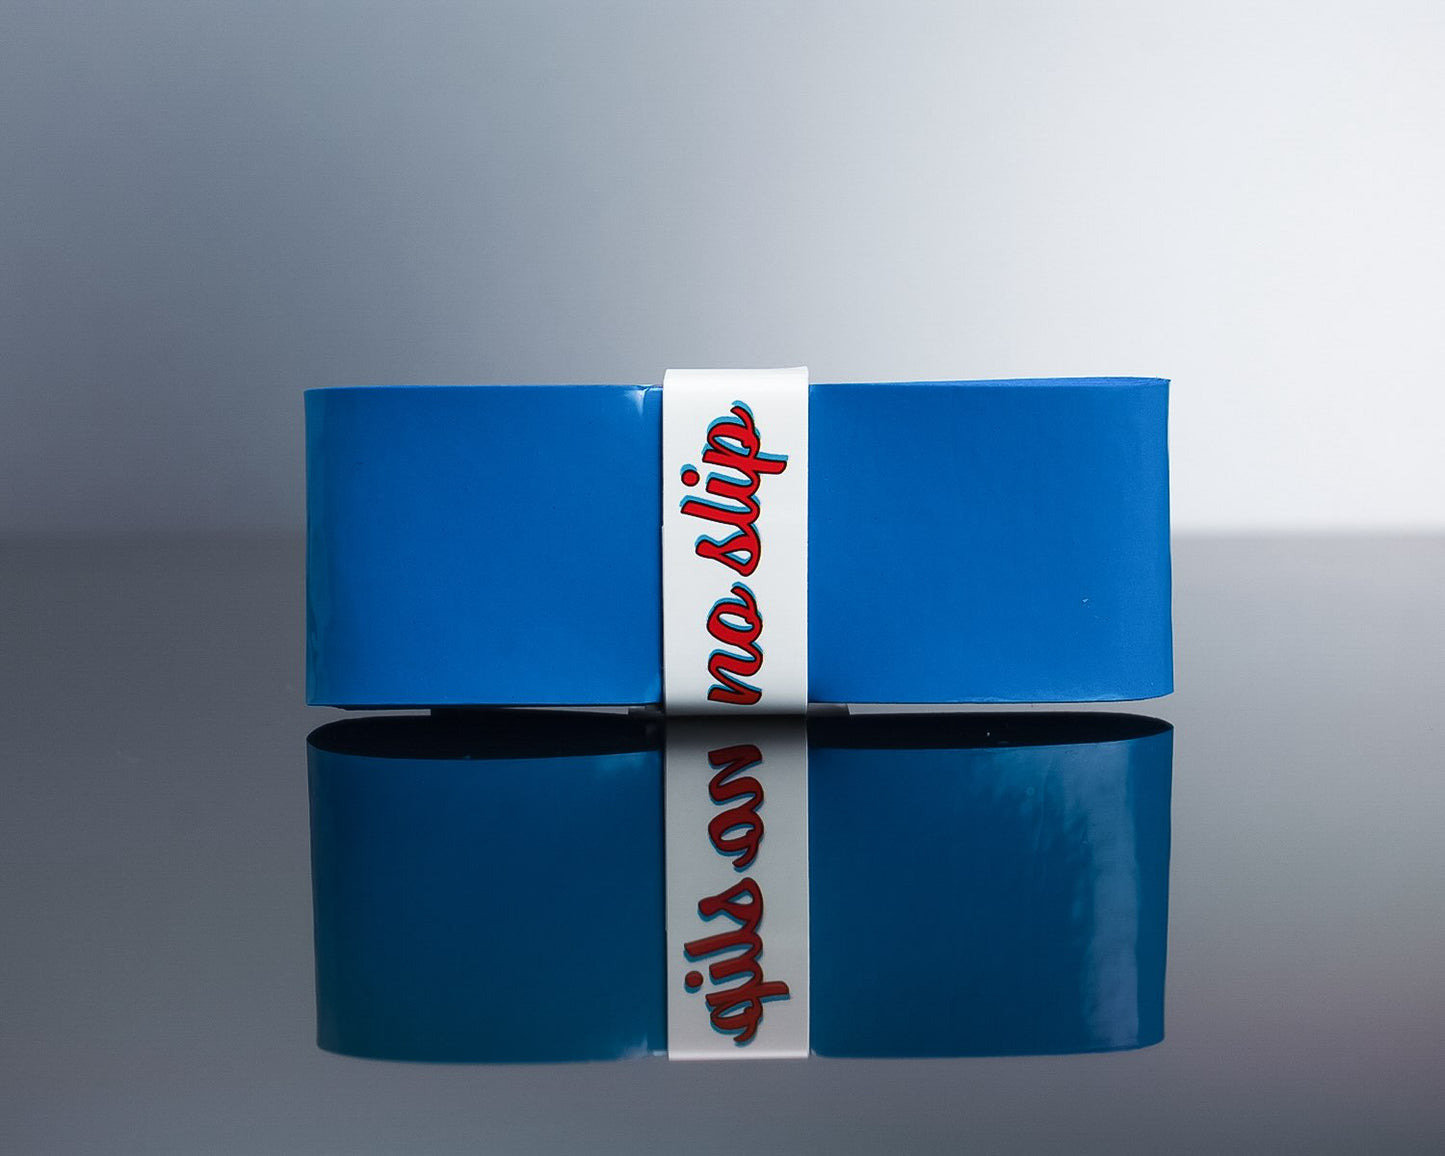 Blue Crue • Drip Grip OG • 0.5mm • 4 Pack